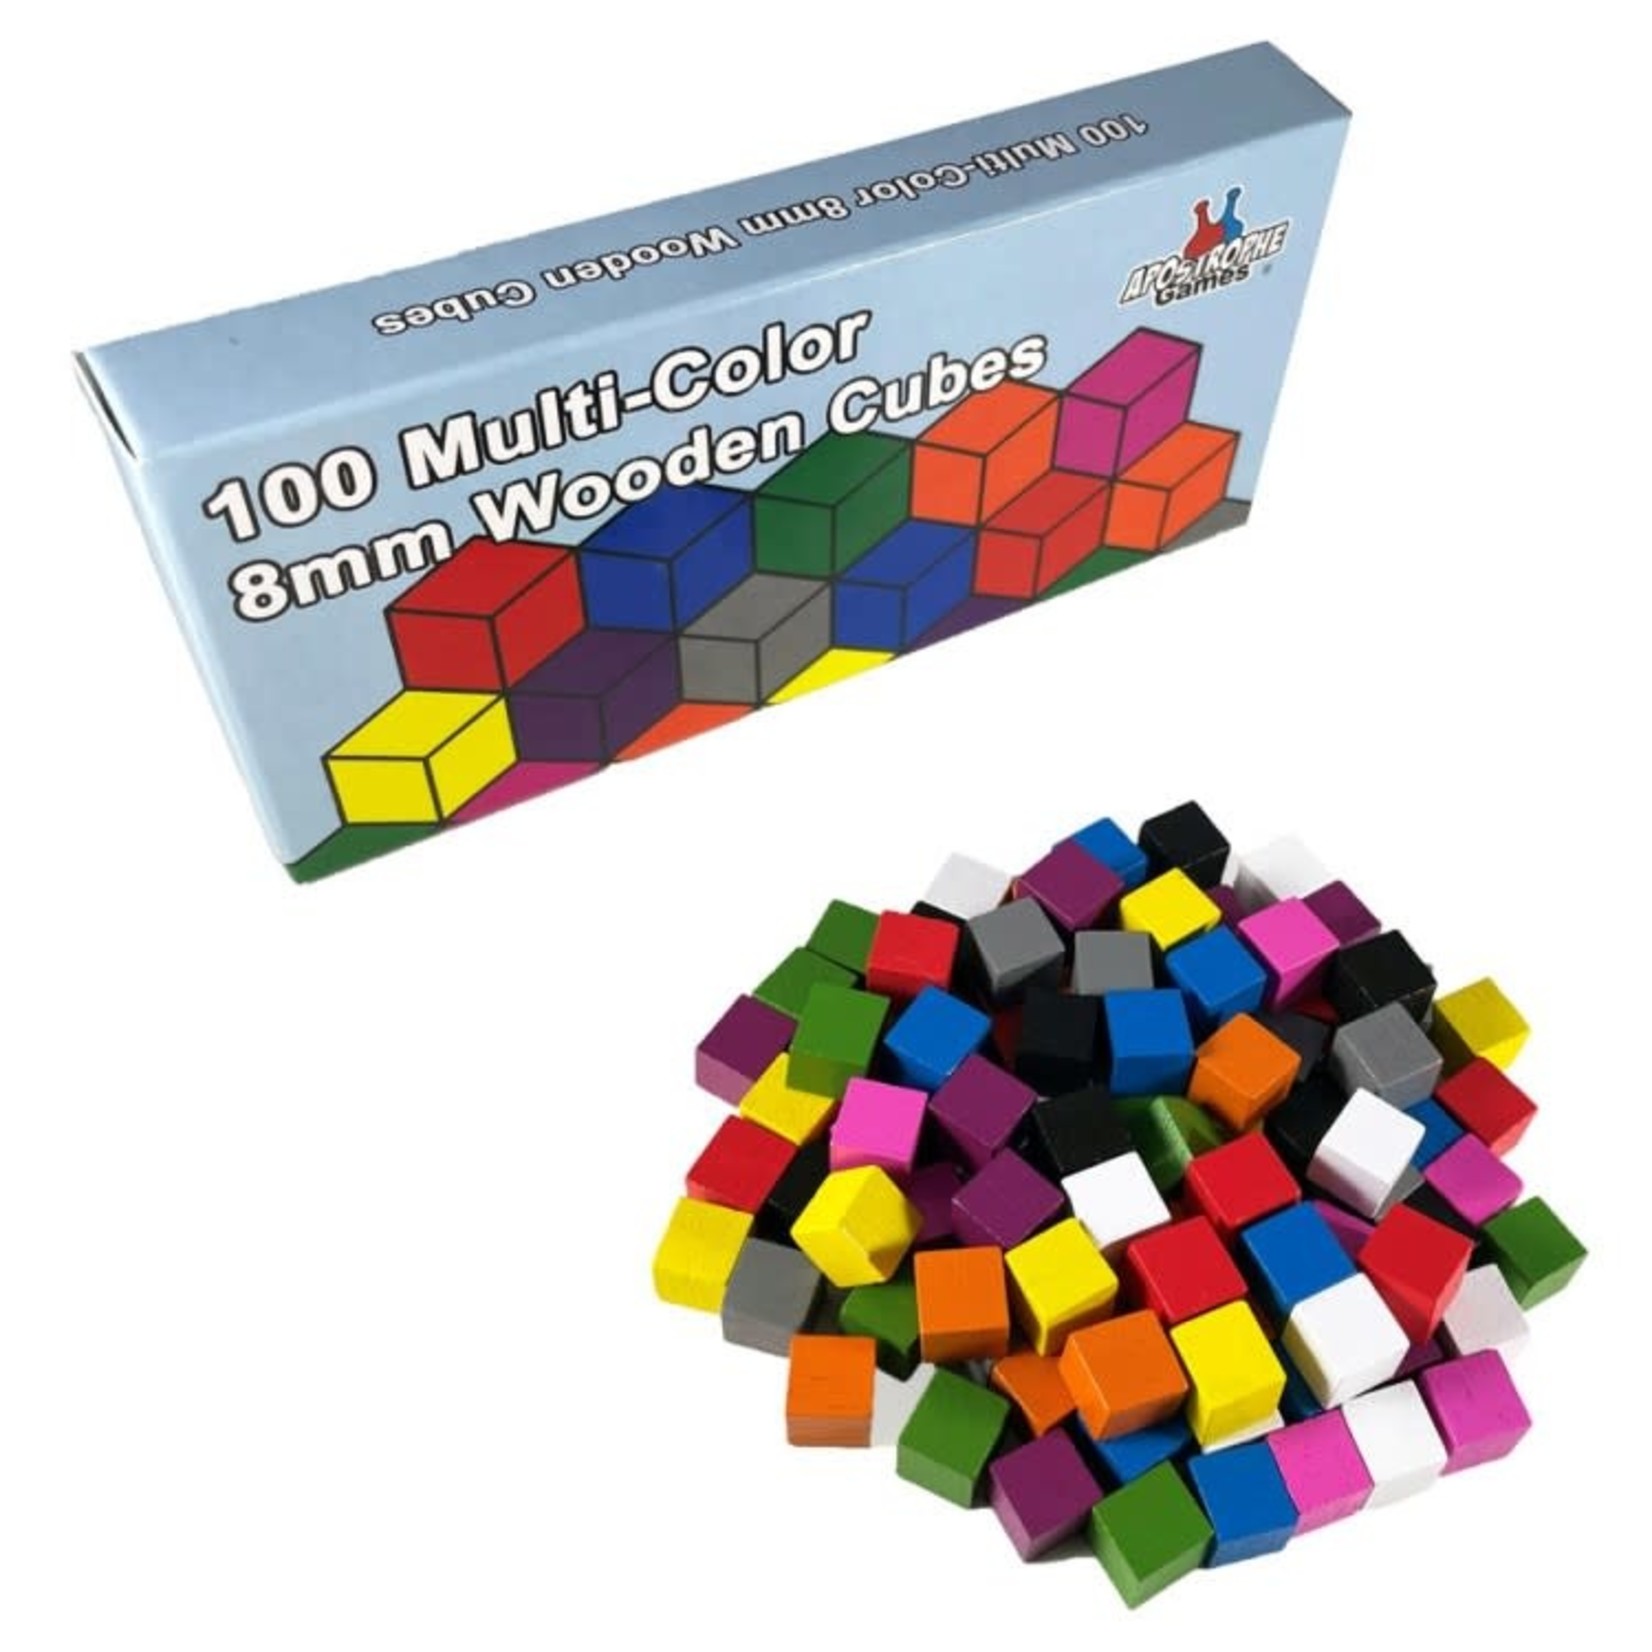 Apostrophe Games 8 mm Multi-Color Wooden Cubes 100 ct